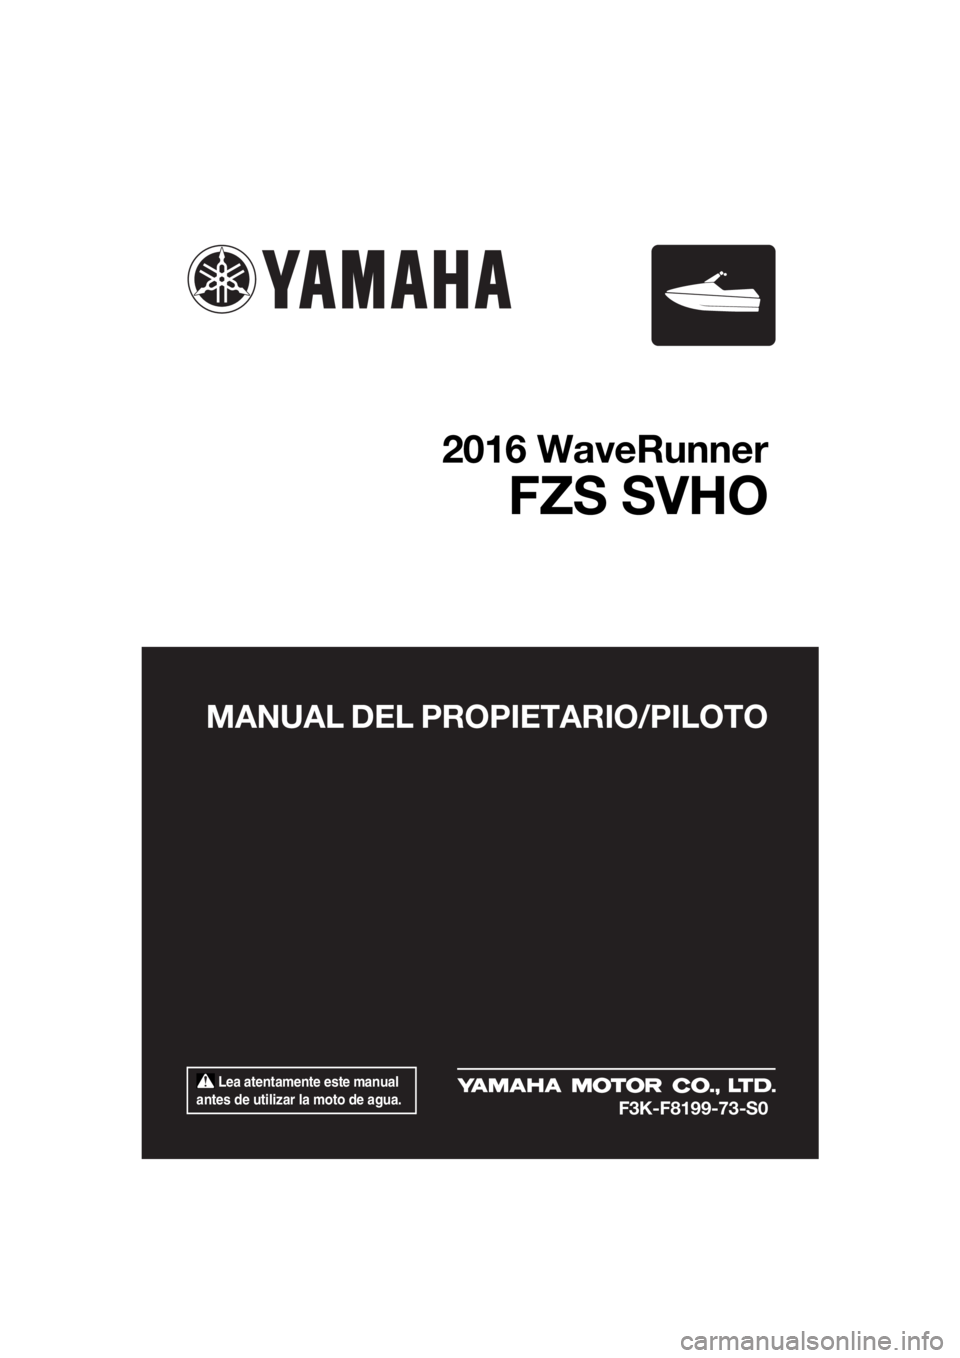 YAMAHA FZS SVHO 2016  Manuale de Empleo (in Spanish)  Lea atentamente este manual 
antes de utilizar la moto de agua.
MANUAL DEL PROPIETARIO/PILOTO
2016 WaveRunner
FZS SVHO
F3K-F8199-73-S0
UF3K73S0.book  Page 1  Tuesday, August 25, 2015  11:19 AM 